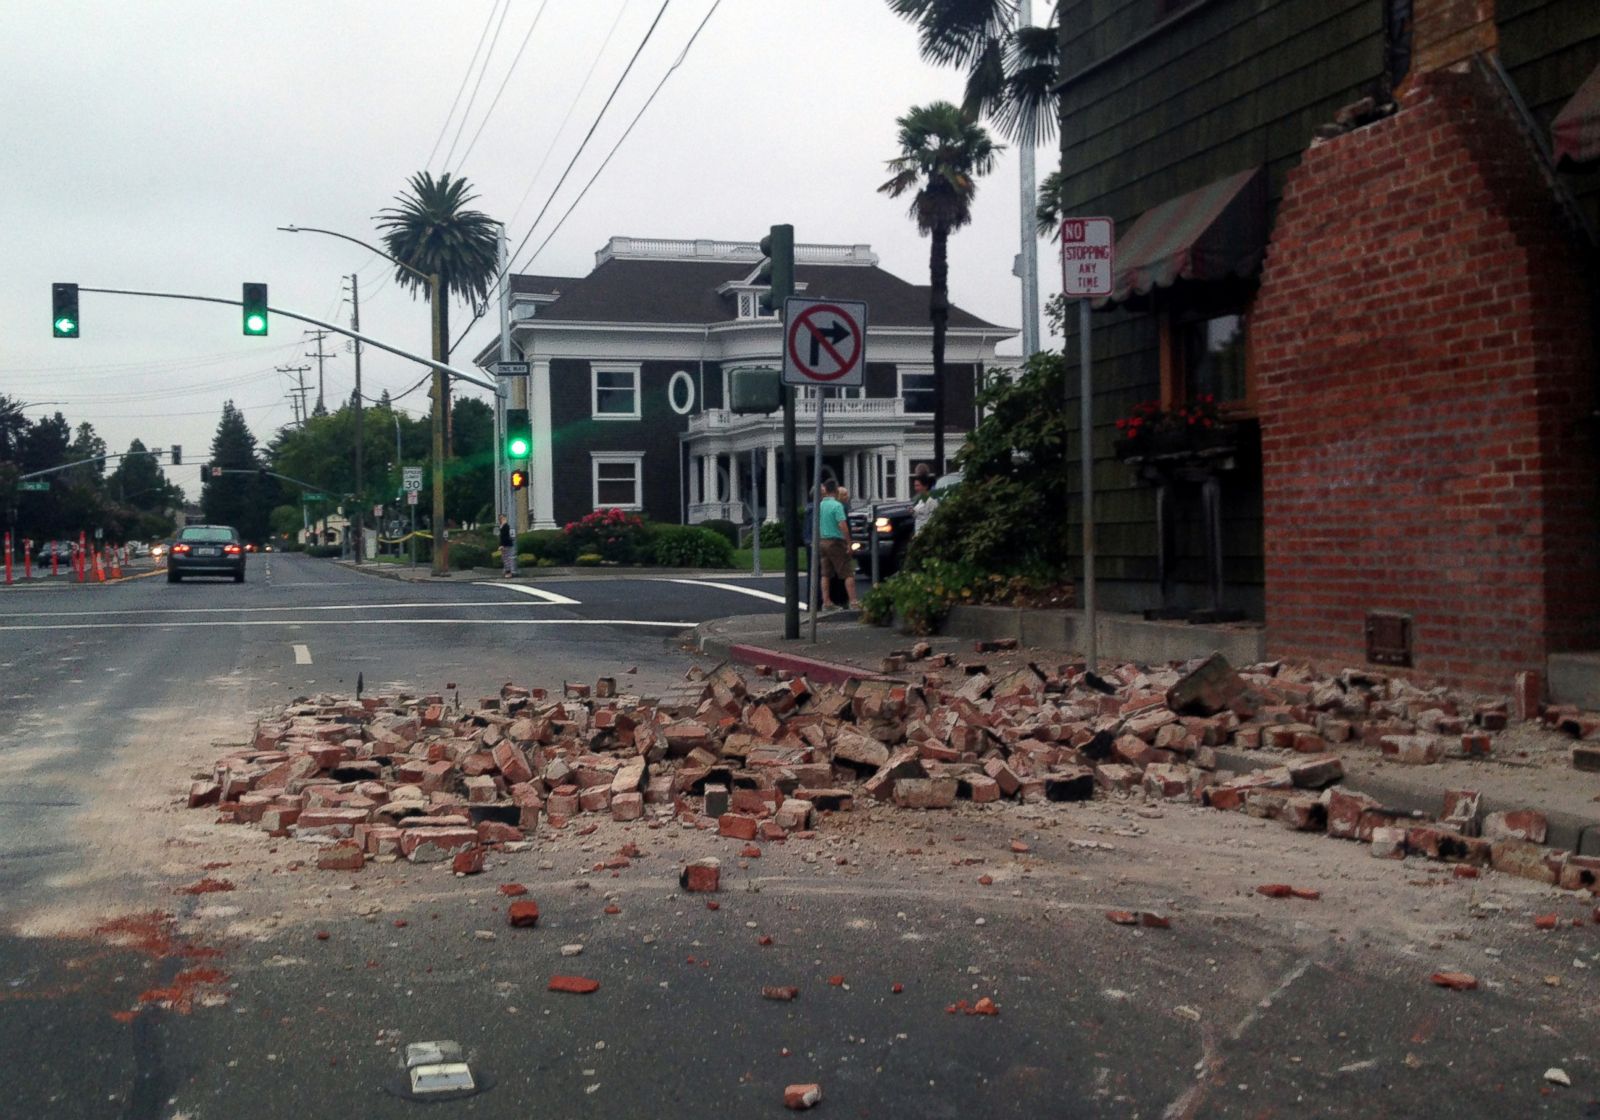 earthquake-strikes-northern-california-photos-image-20-abc-news